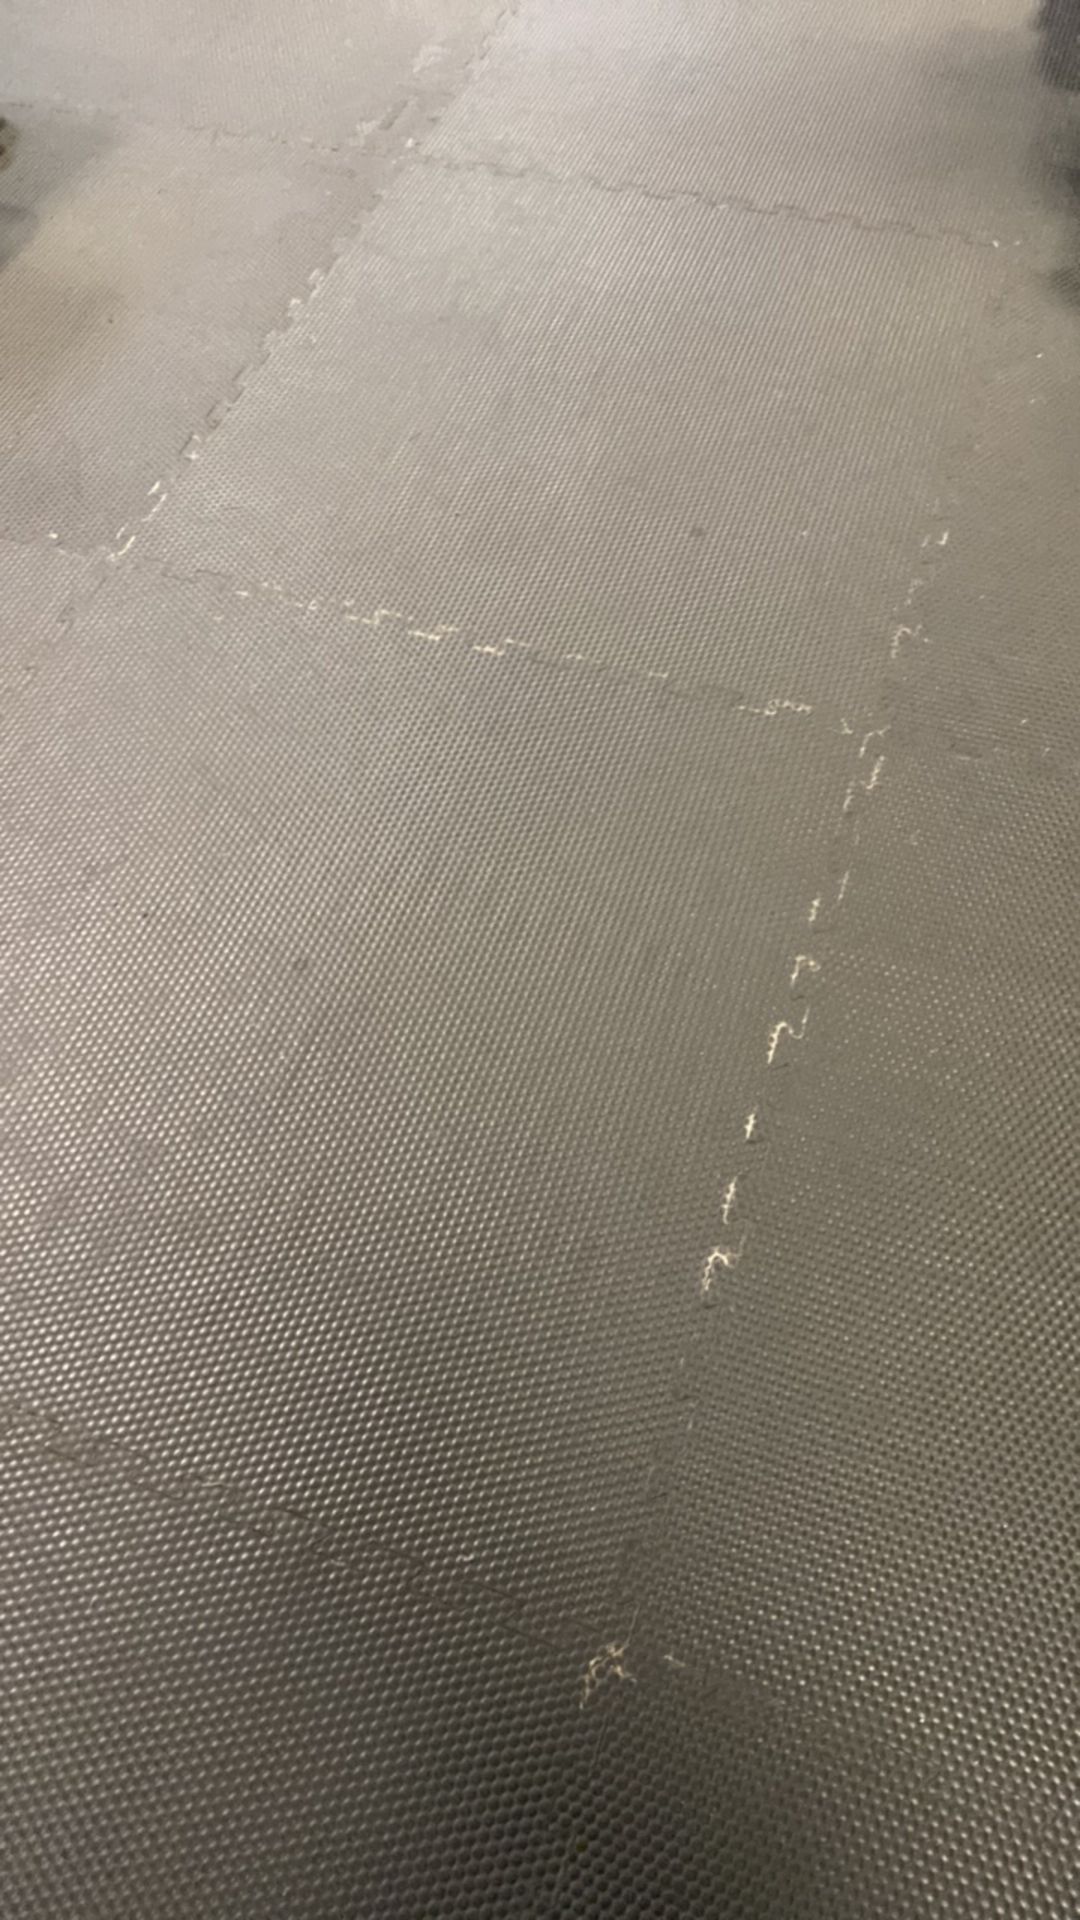 10x Gym matt flooring tiles - Image 2 of 4